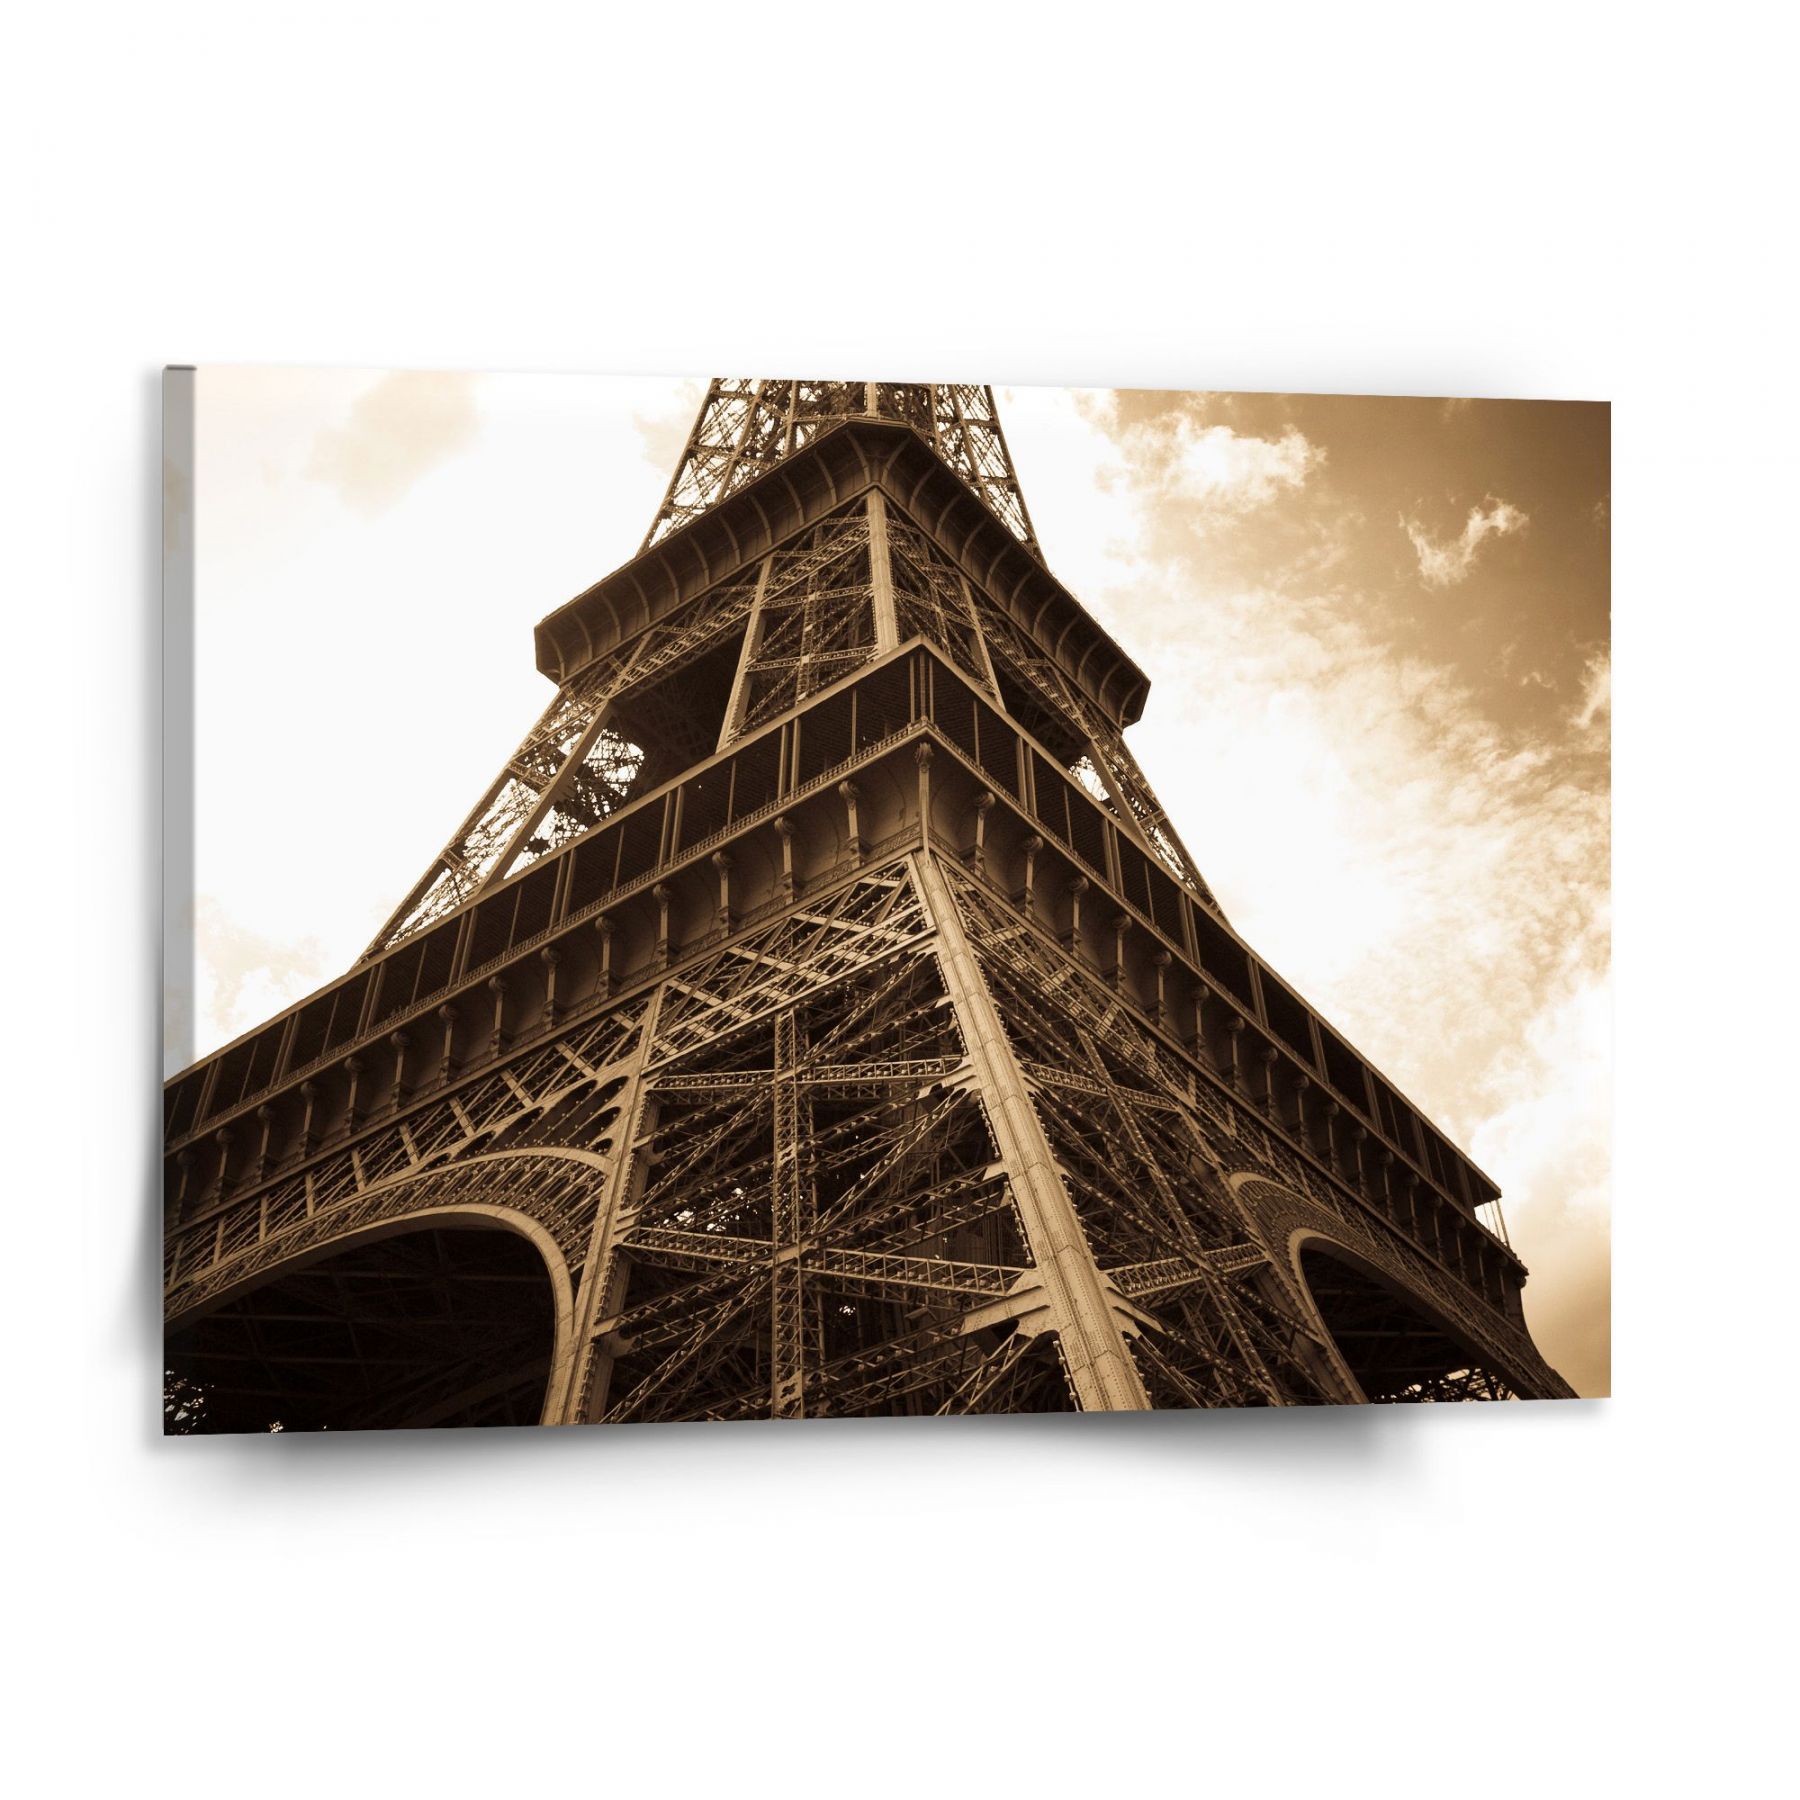 Obraz SABLIO - Eiffelova věž 6 150x110 cm - E-shop Sablo s.r.o.